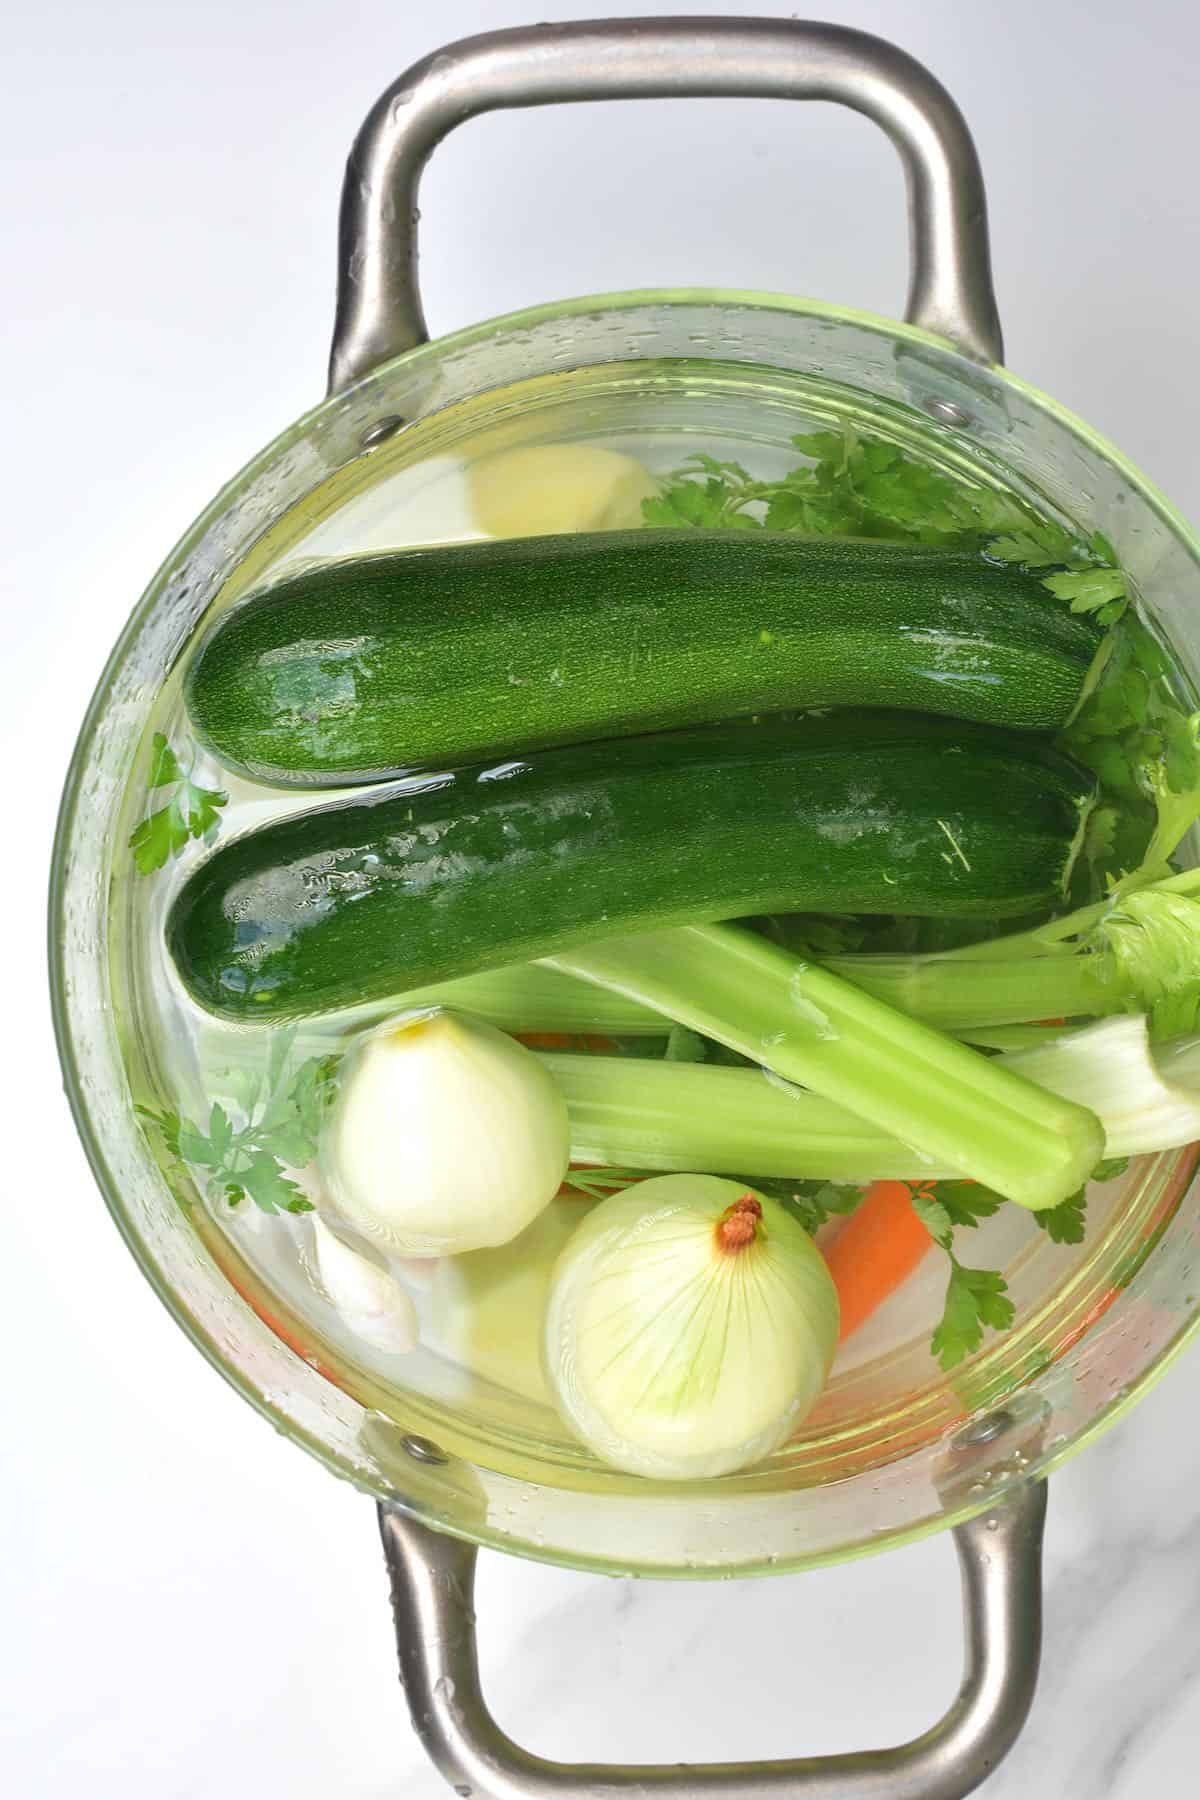 Soaking vegetables in a pot